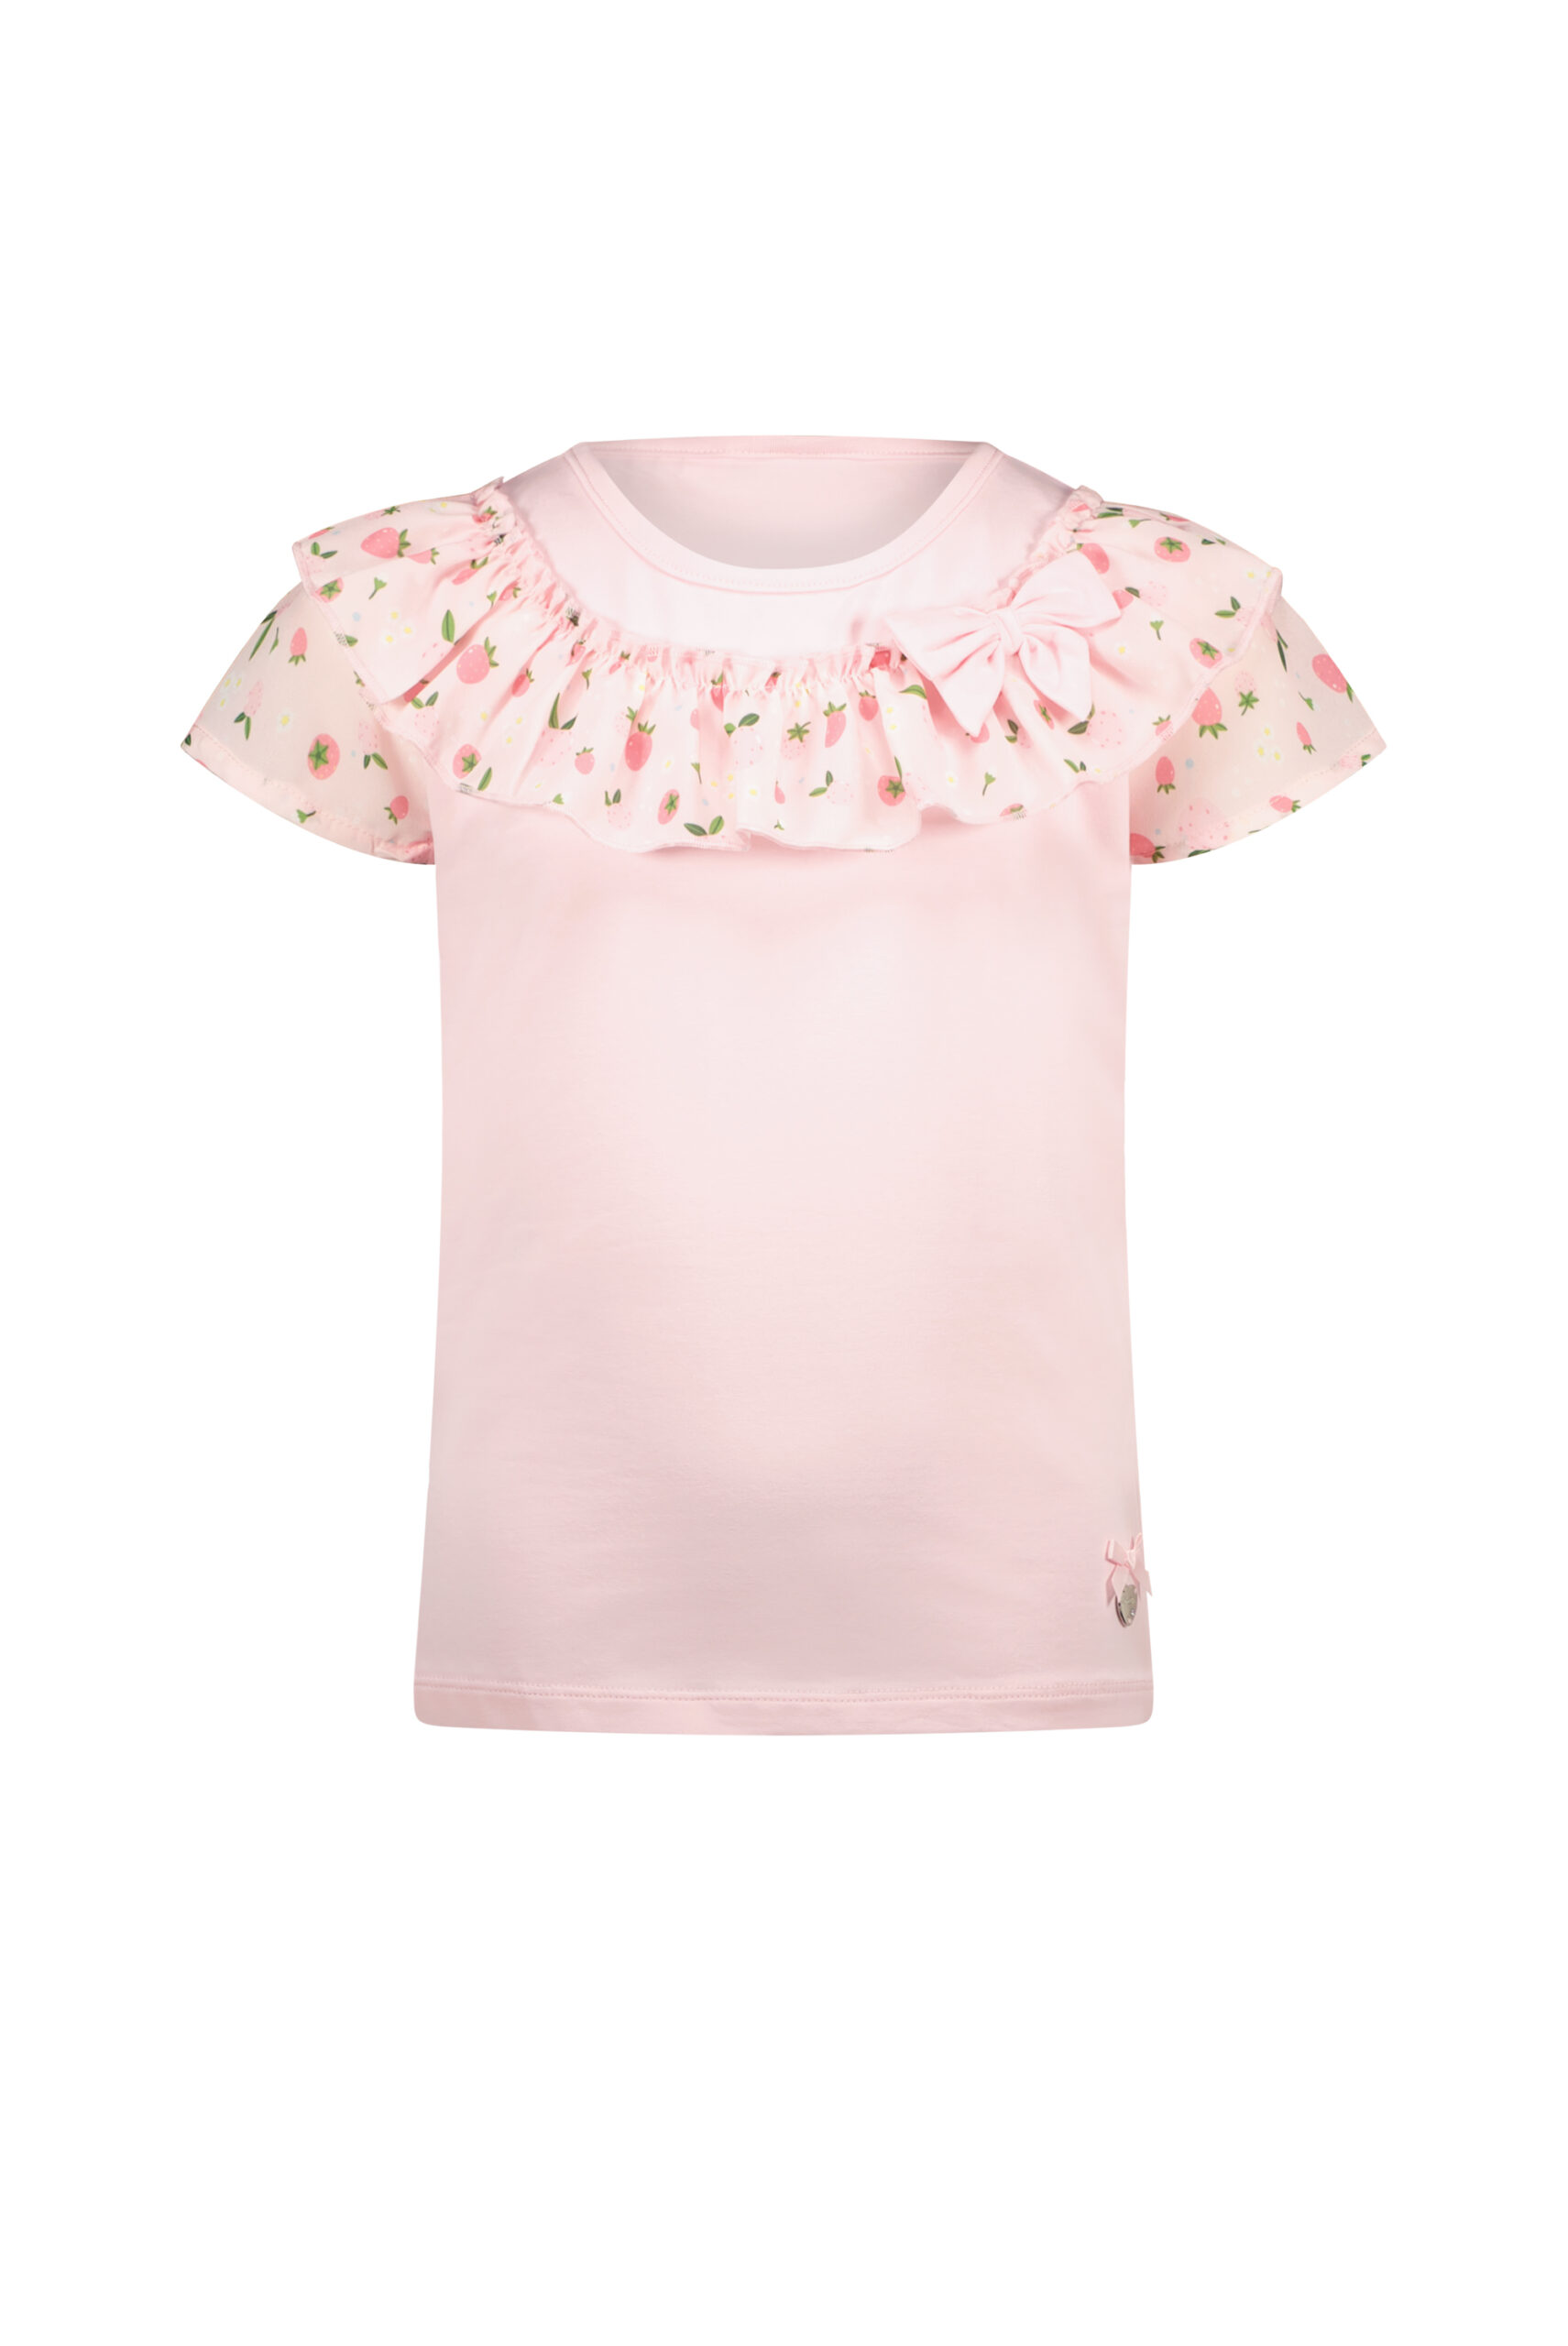 Le Chic roze shirt met aardbei print en details